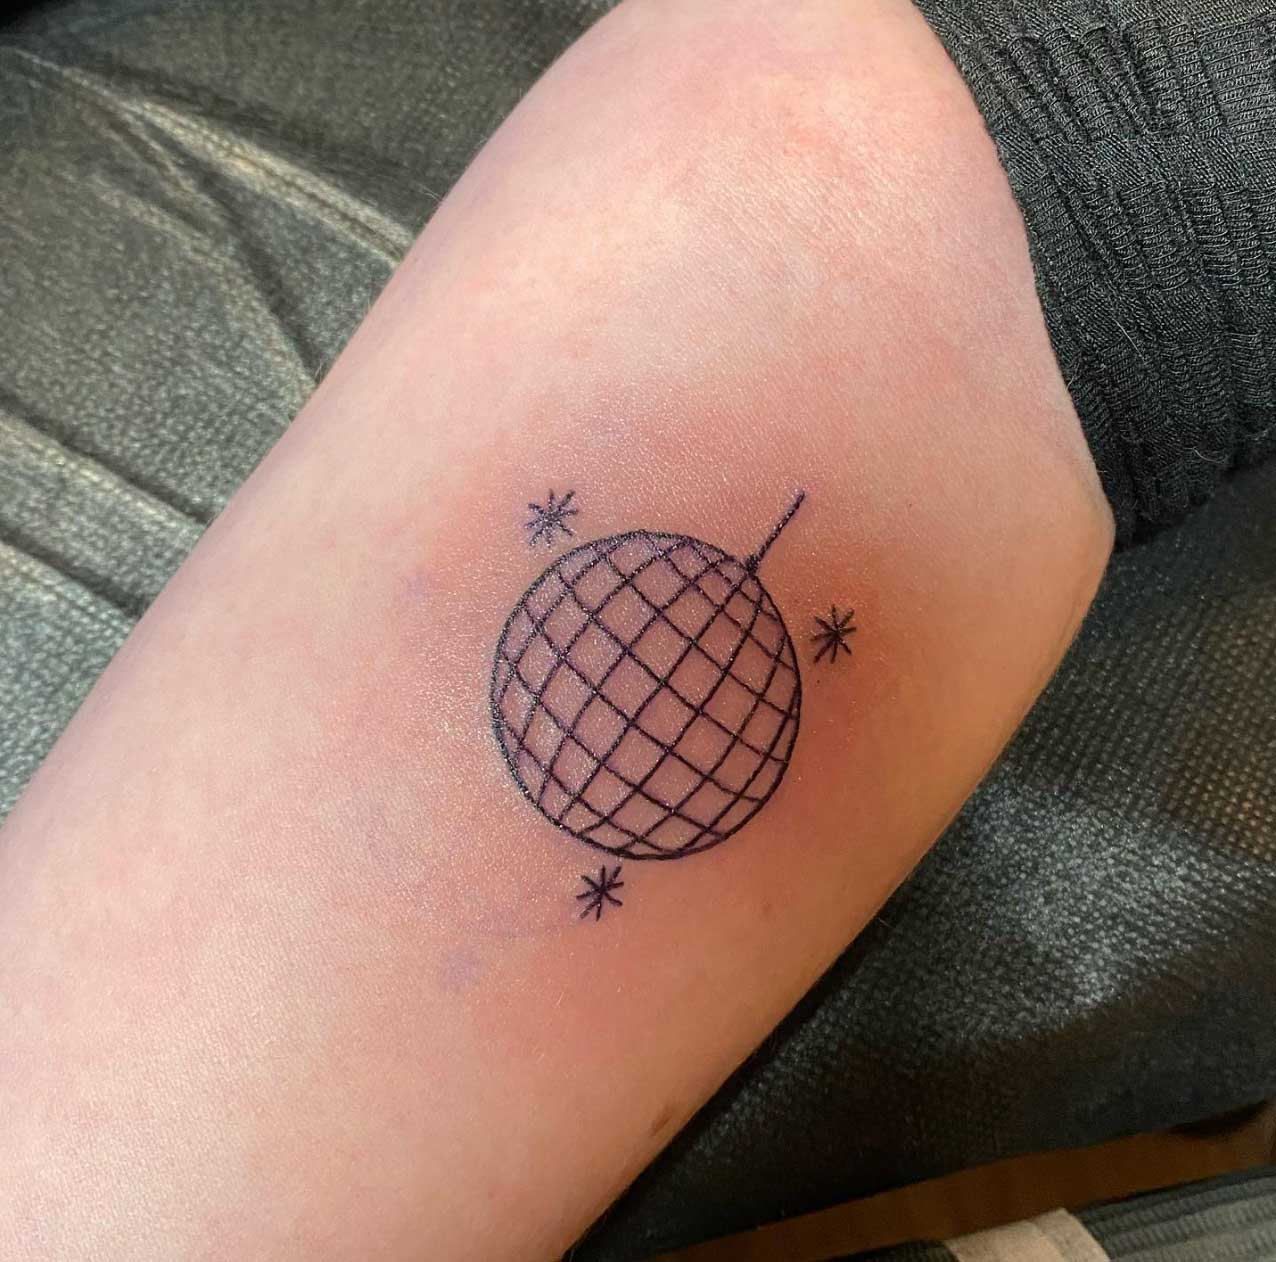 Single needle disco ball tattoo on the inner forearm